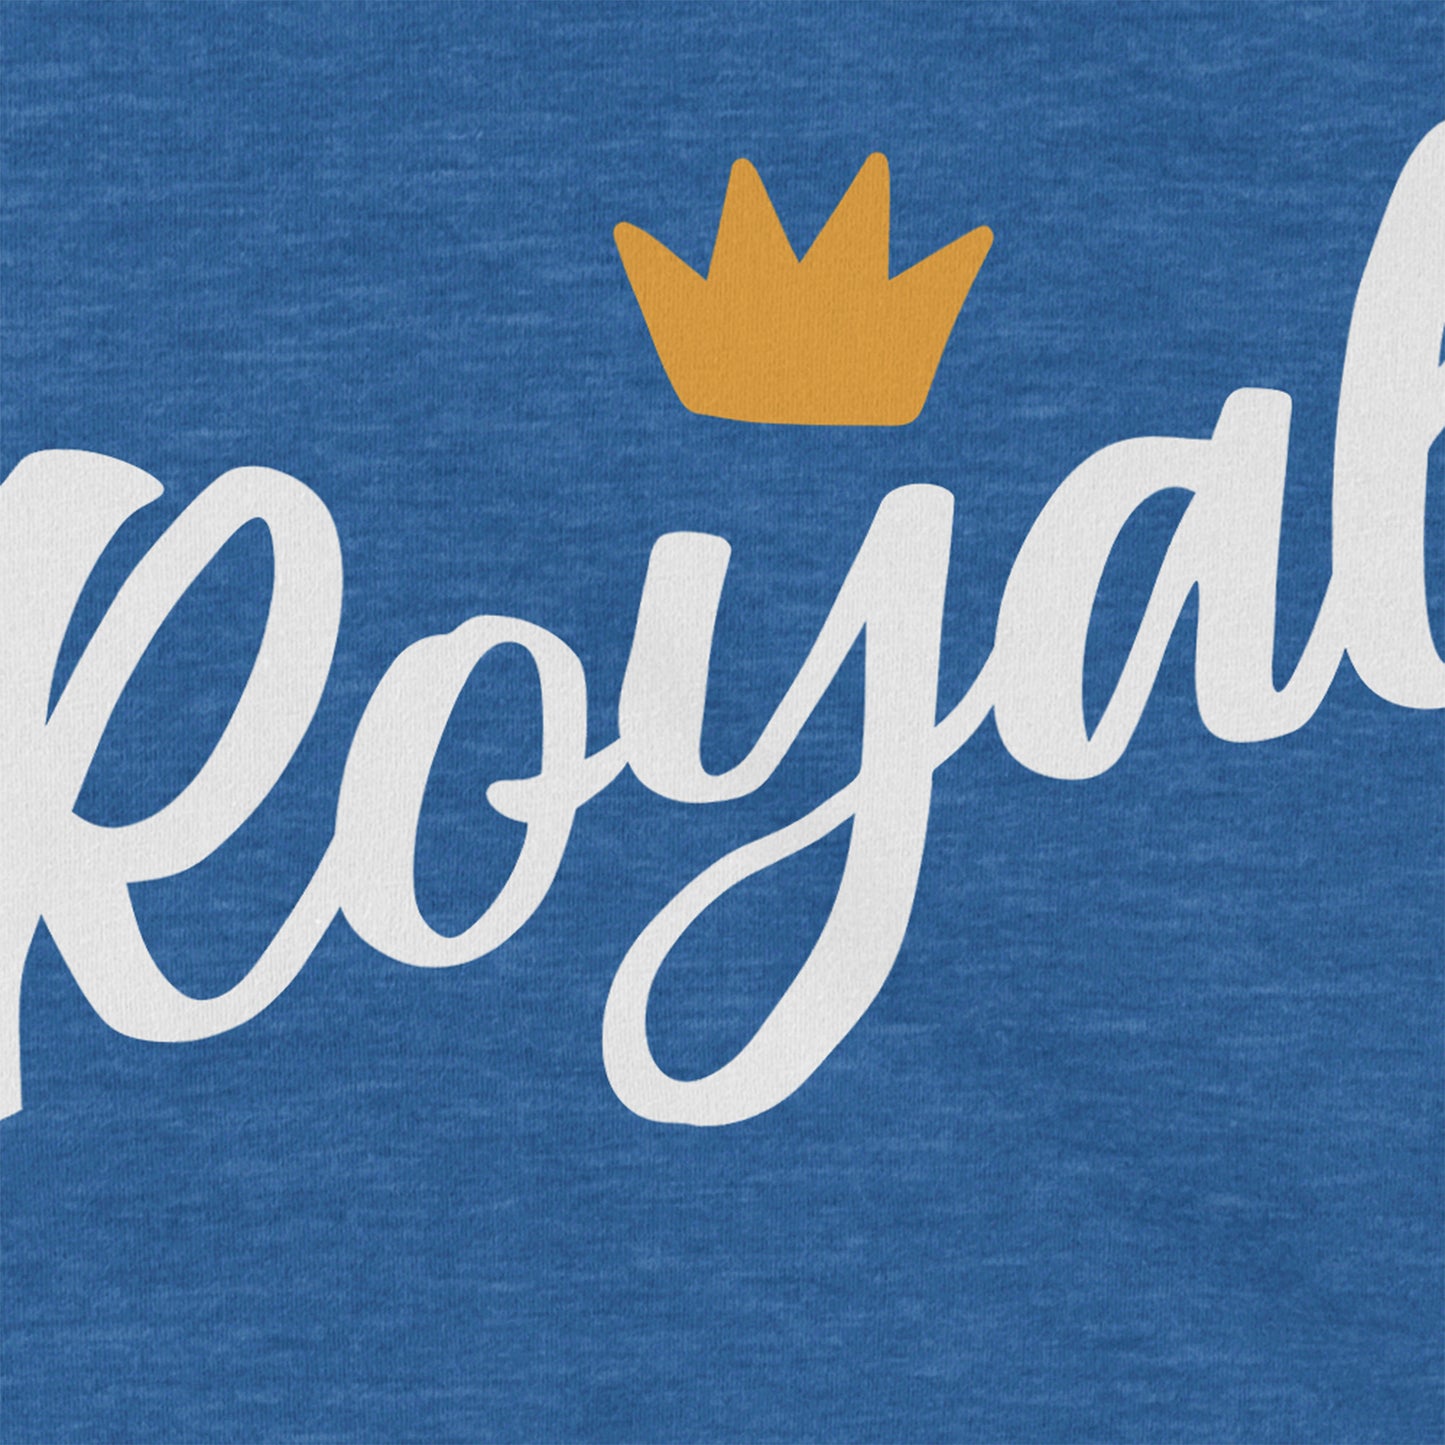 KC Swag Kansas City Royals ROYALS CROWN on heather royal blue unisex t-shirt closeup details of printed graphics